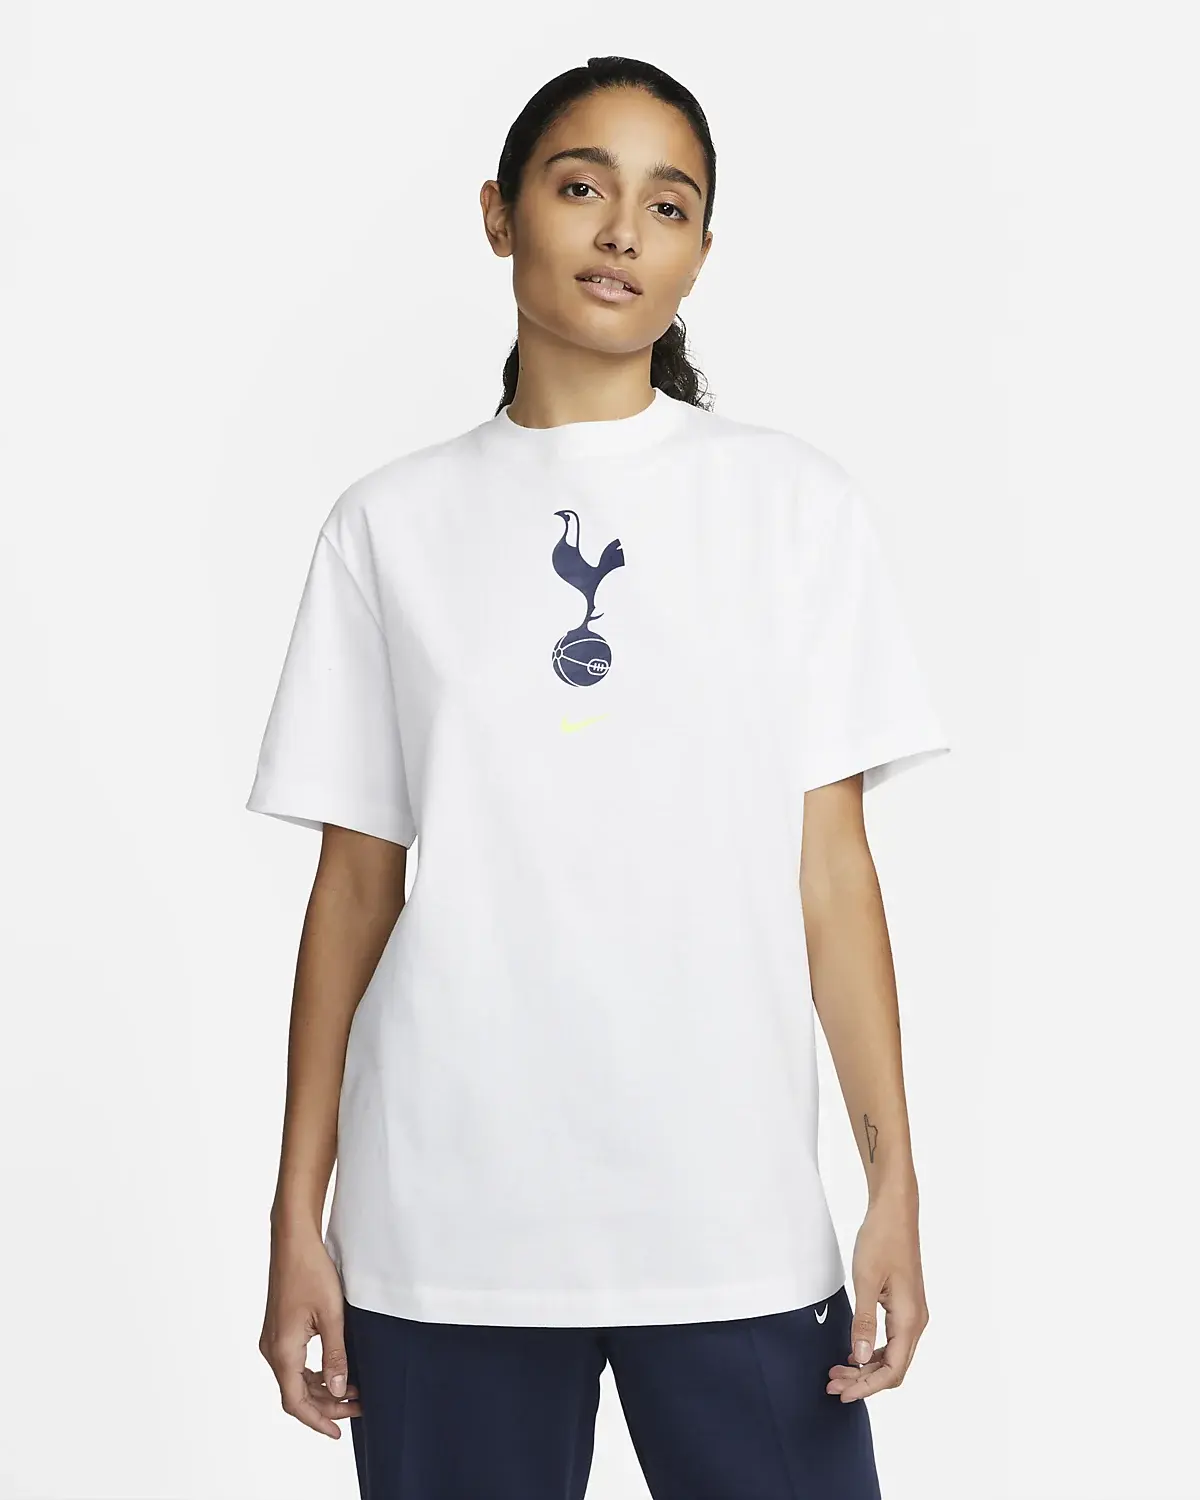 Nike Crest Tottenham Hotspur. 1